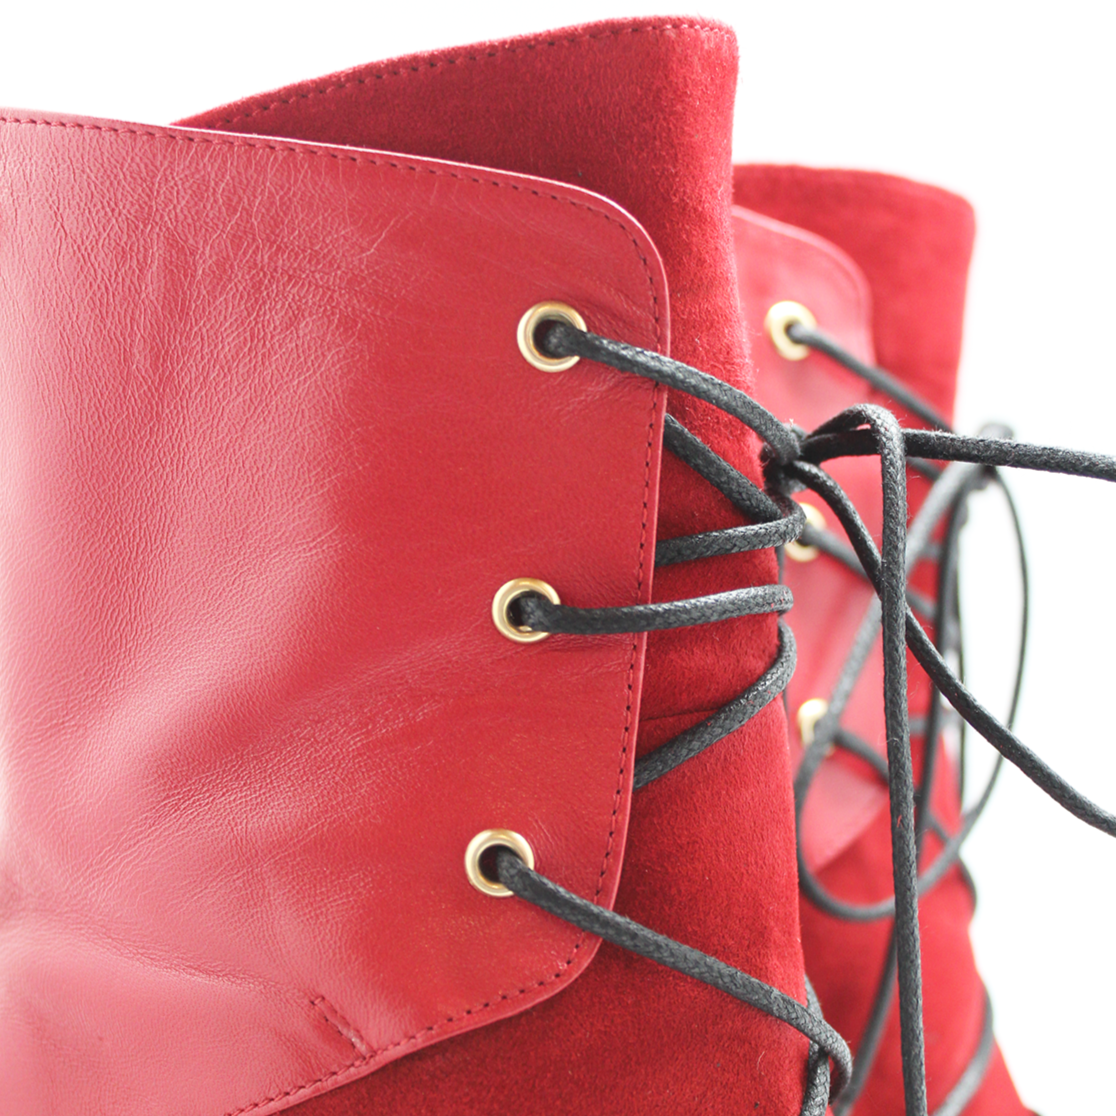 Mina - Red/black ankle heel boot